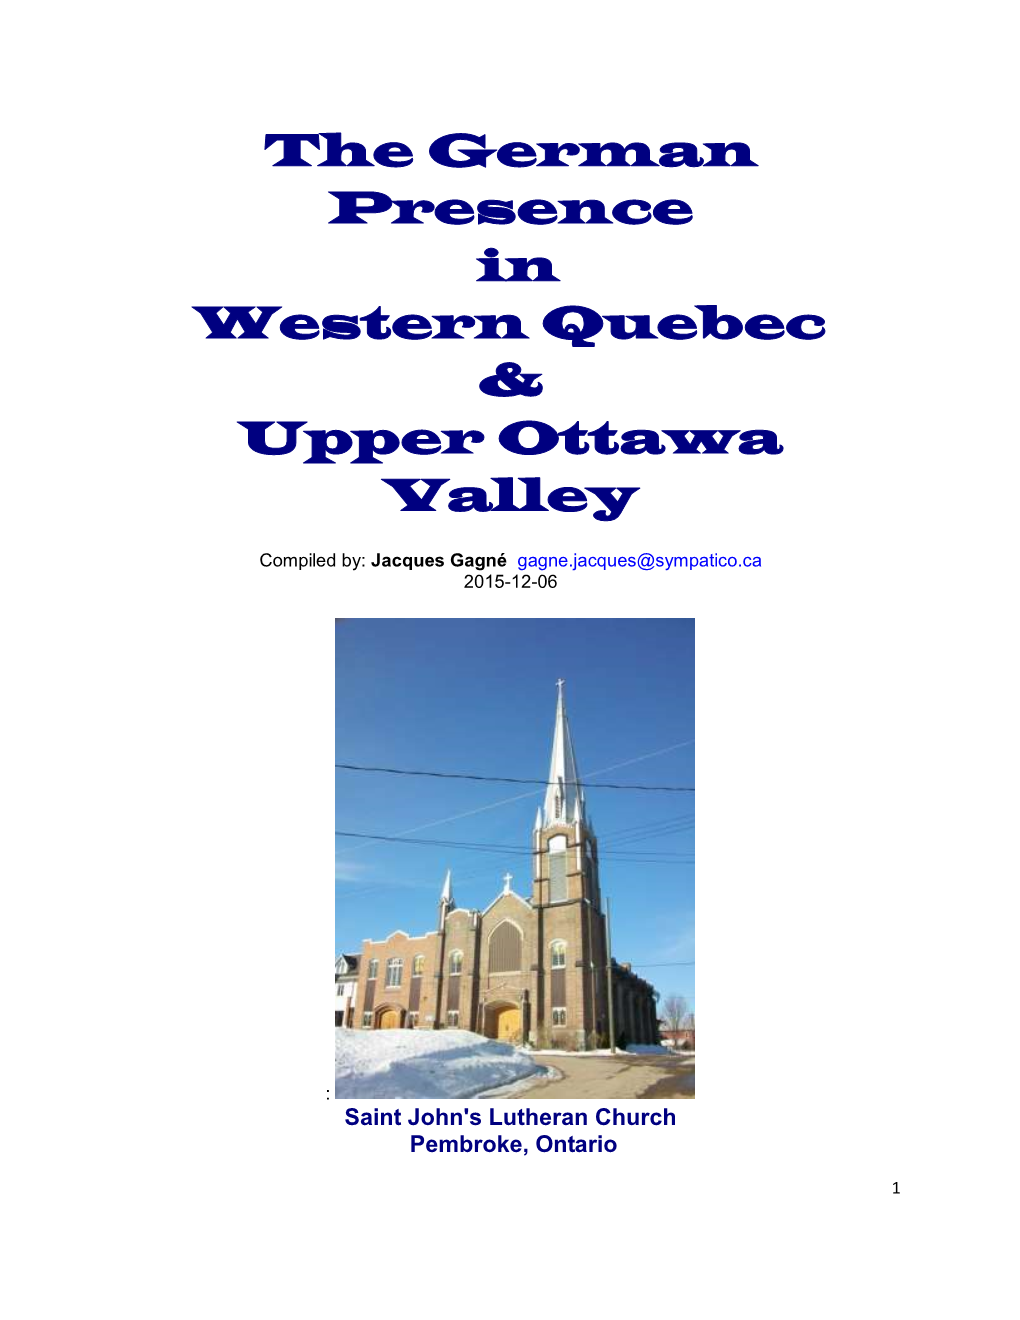 The German Presence in Western Quebec & Upper Ottawa Valley